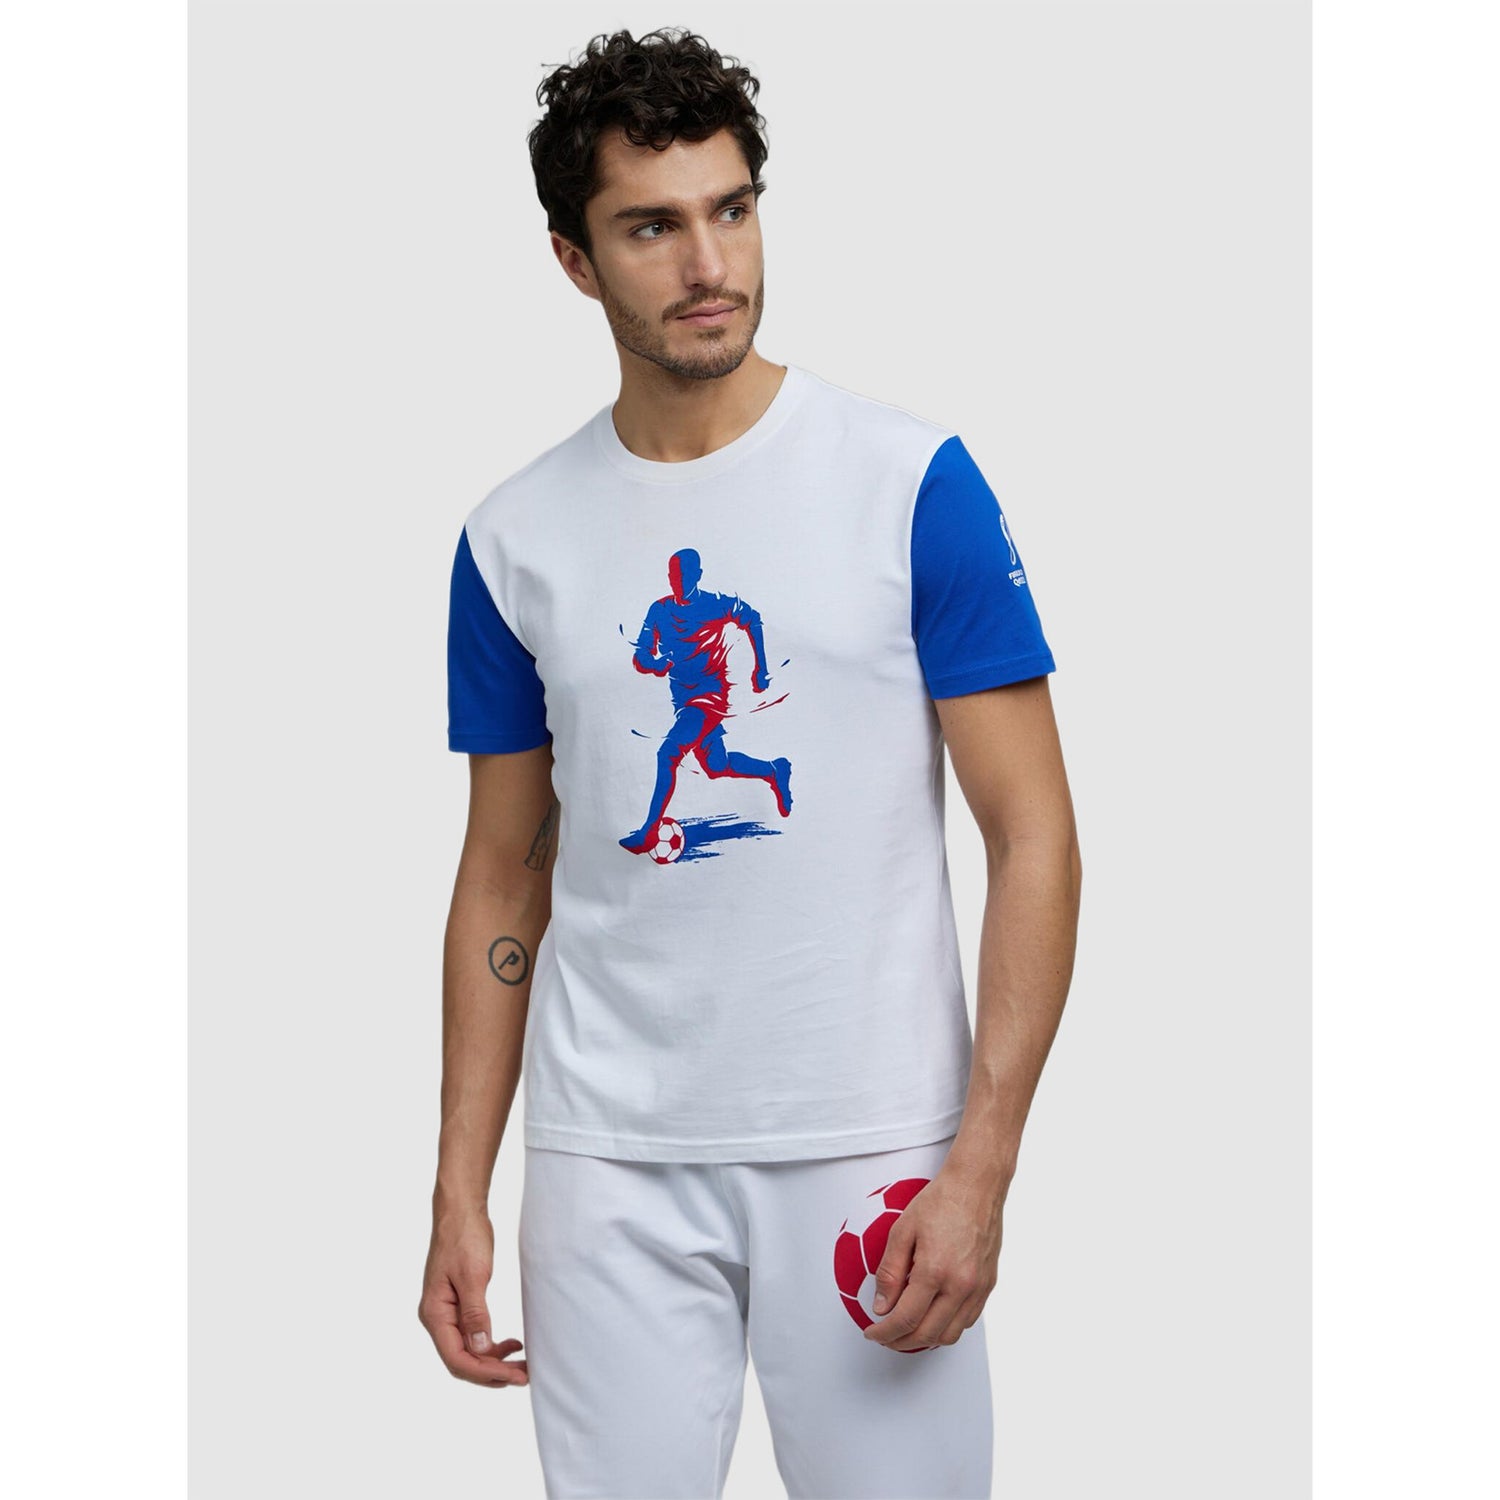 Men's FIFA White Graphic T-shirt (Various Sizes)